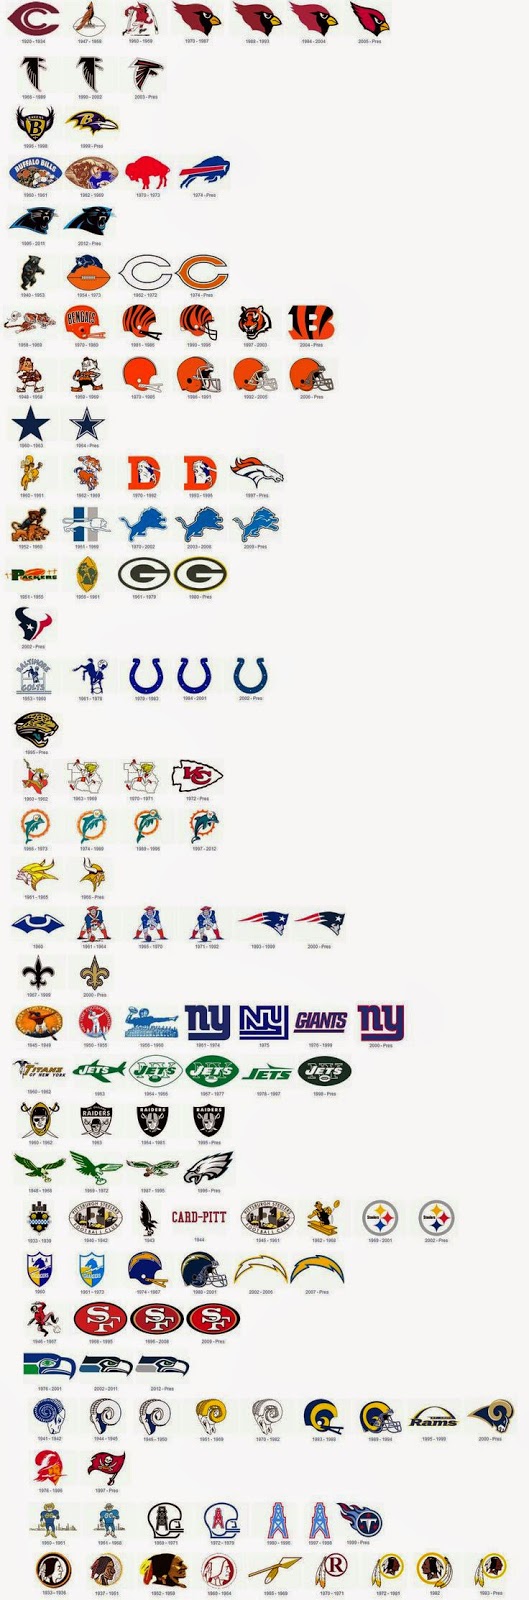 NFL team logo changes chart Bob's Blitz